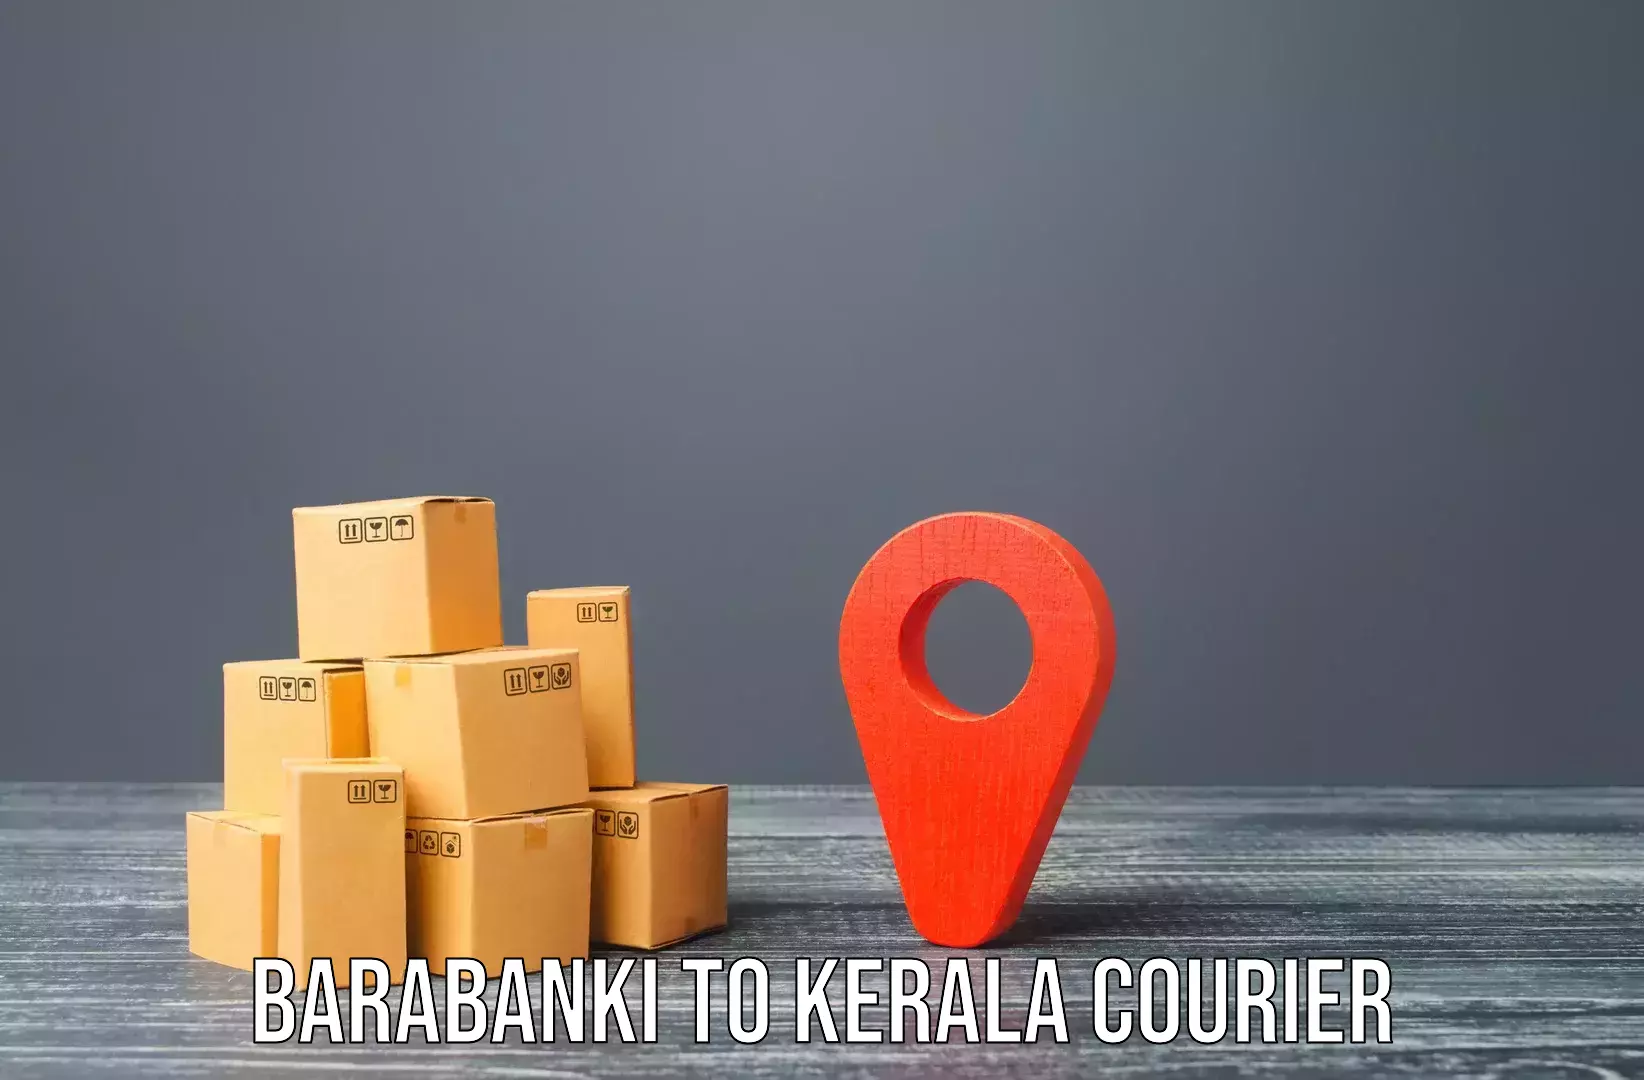 Home goods moving company Barabanki to Palakkad